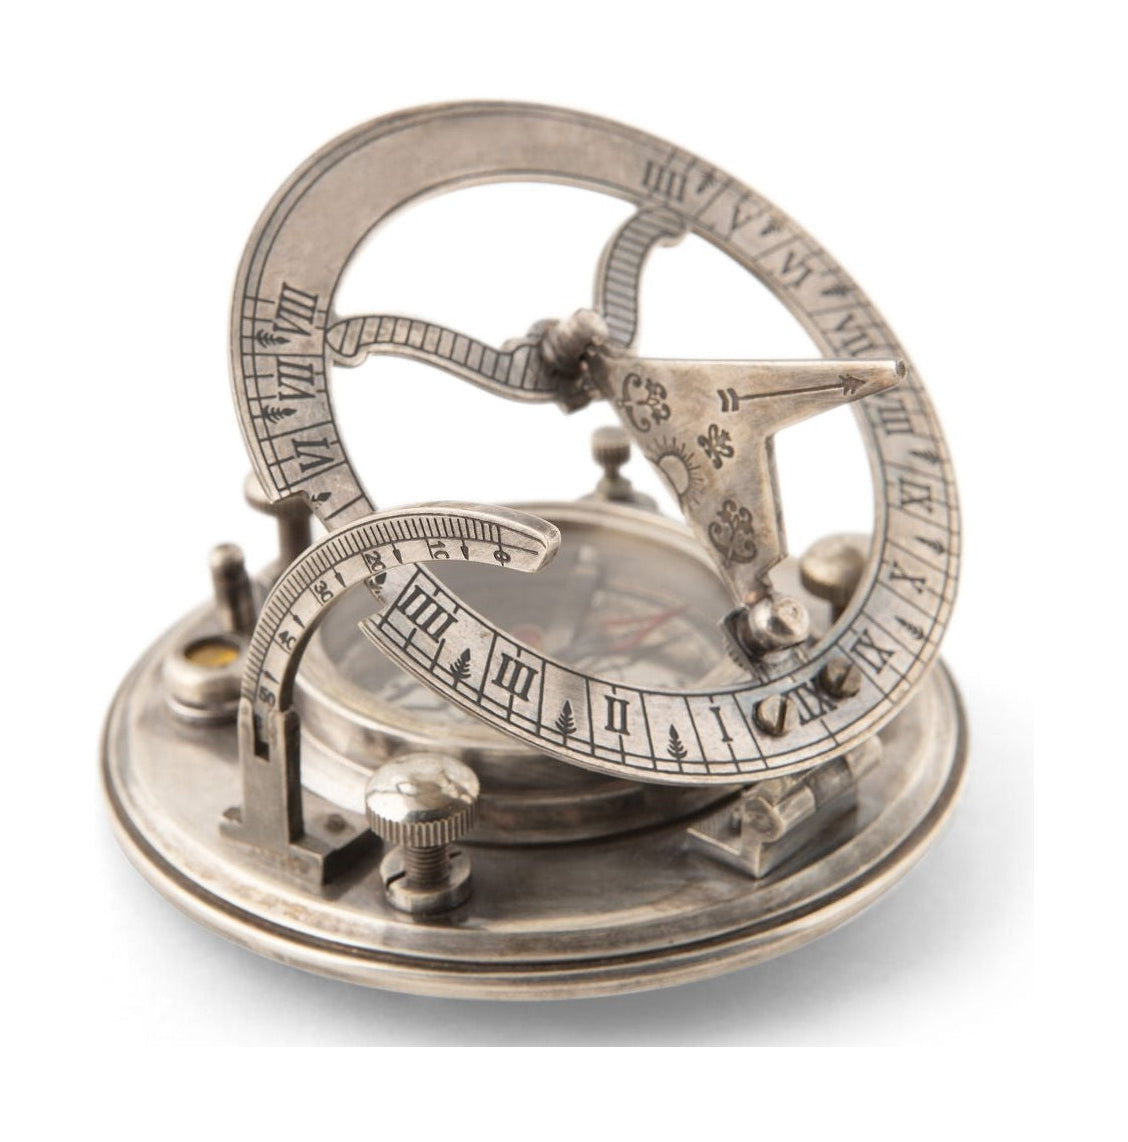 Authentic Models Mariner's Kompas